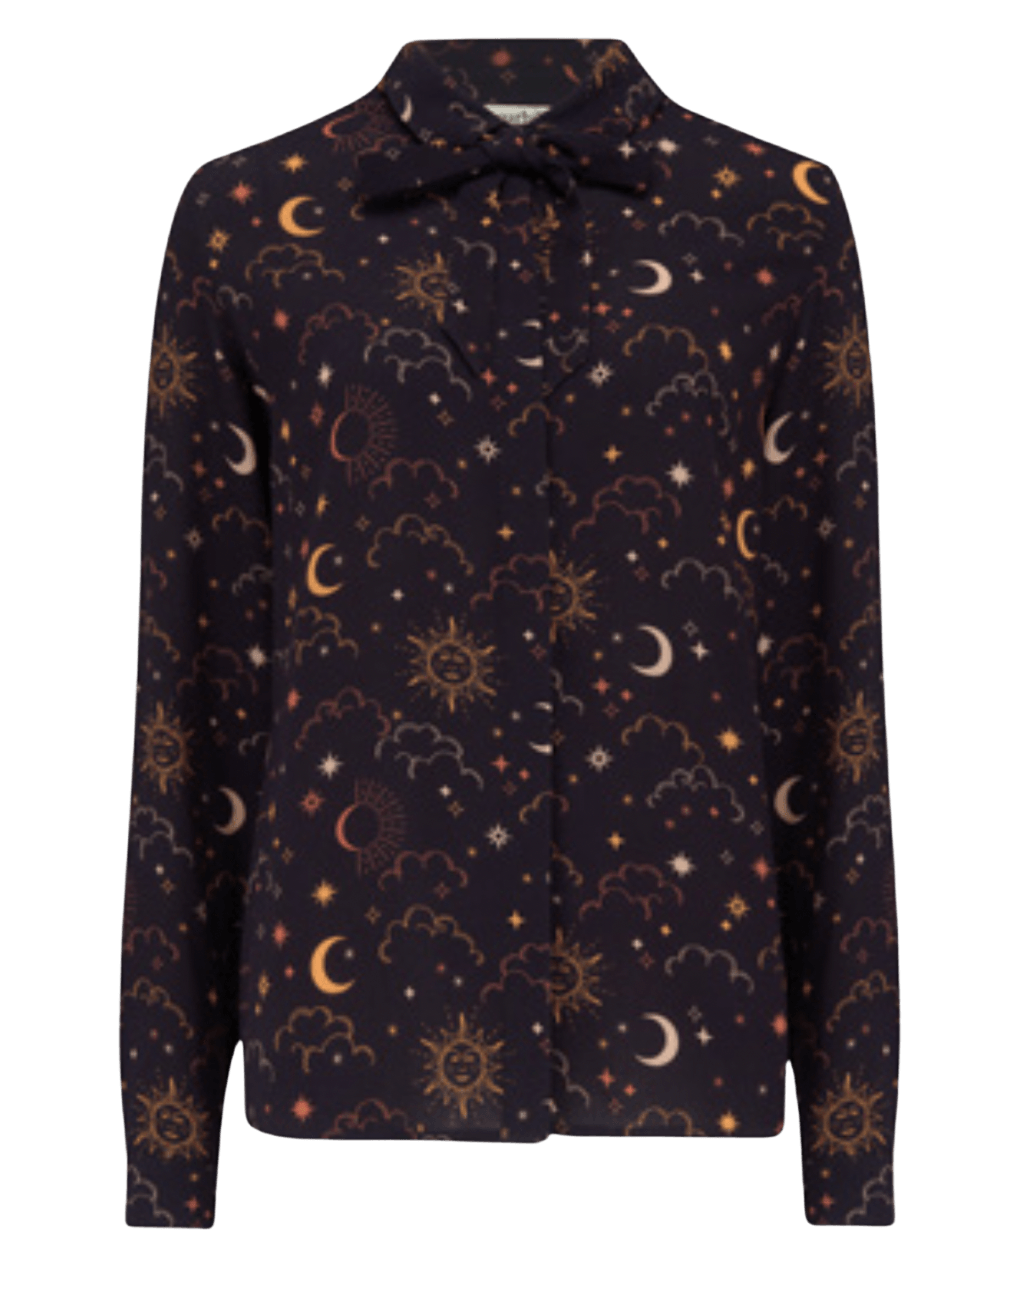 Camisa Catrina Black Celestial Nights - ECRU